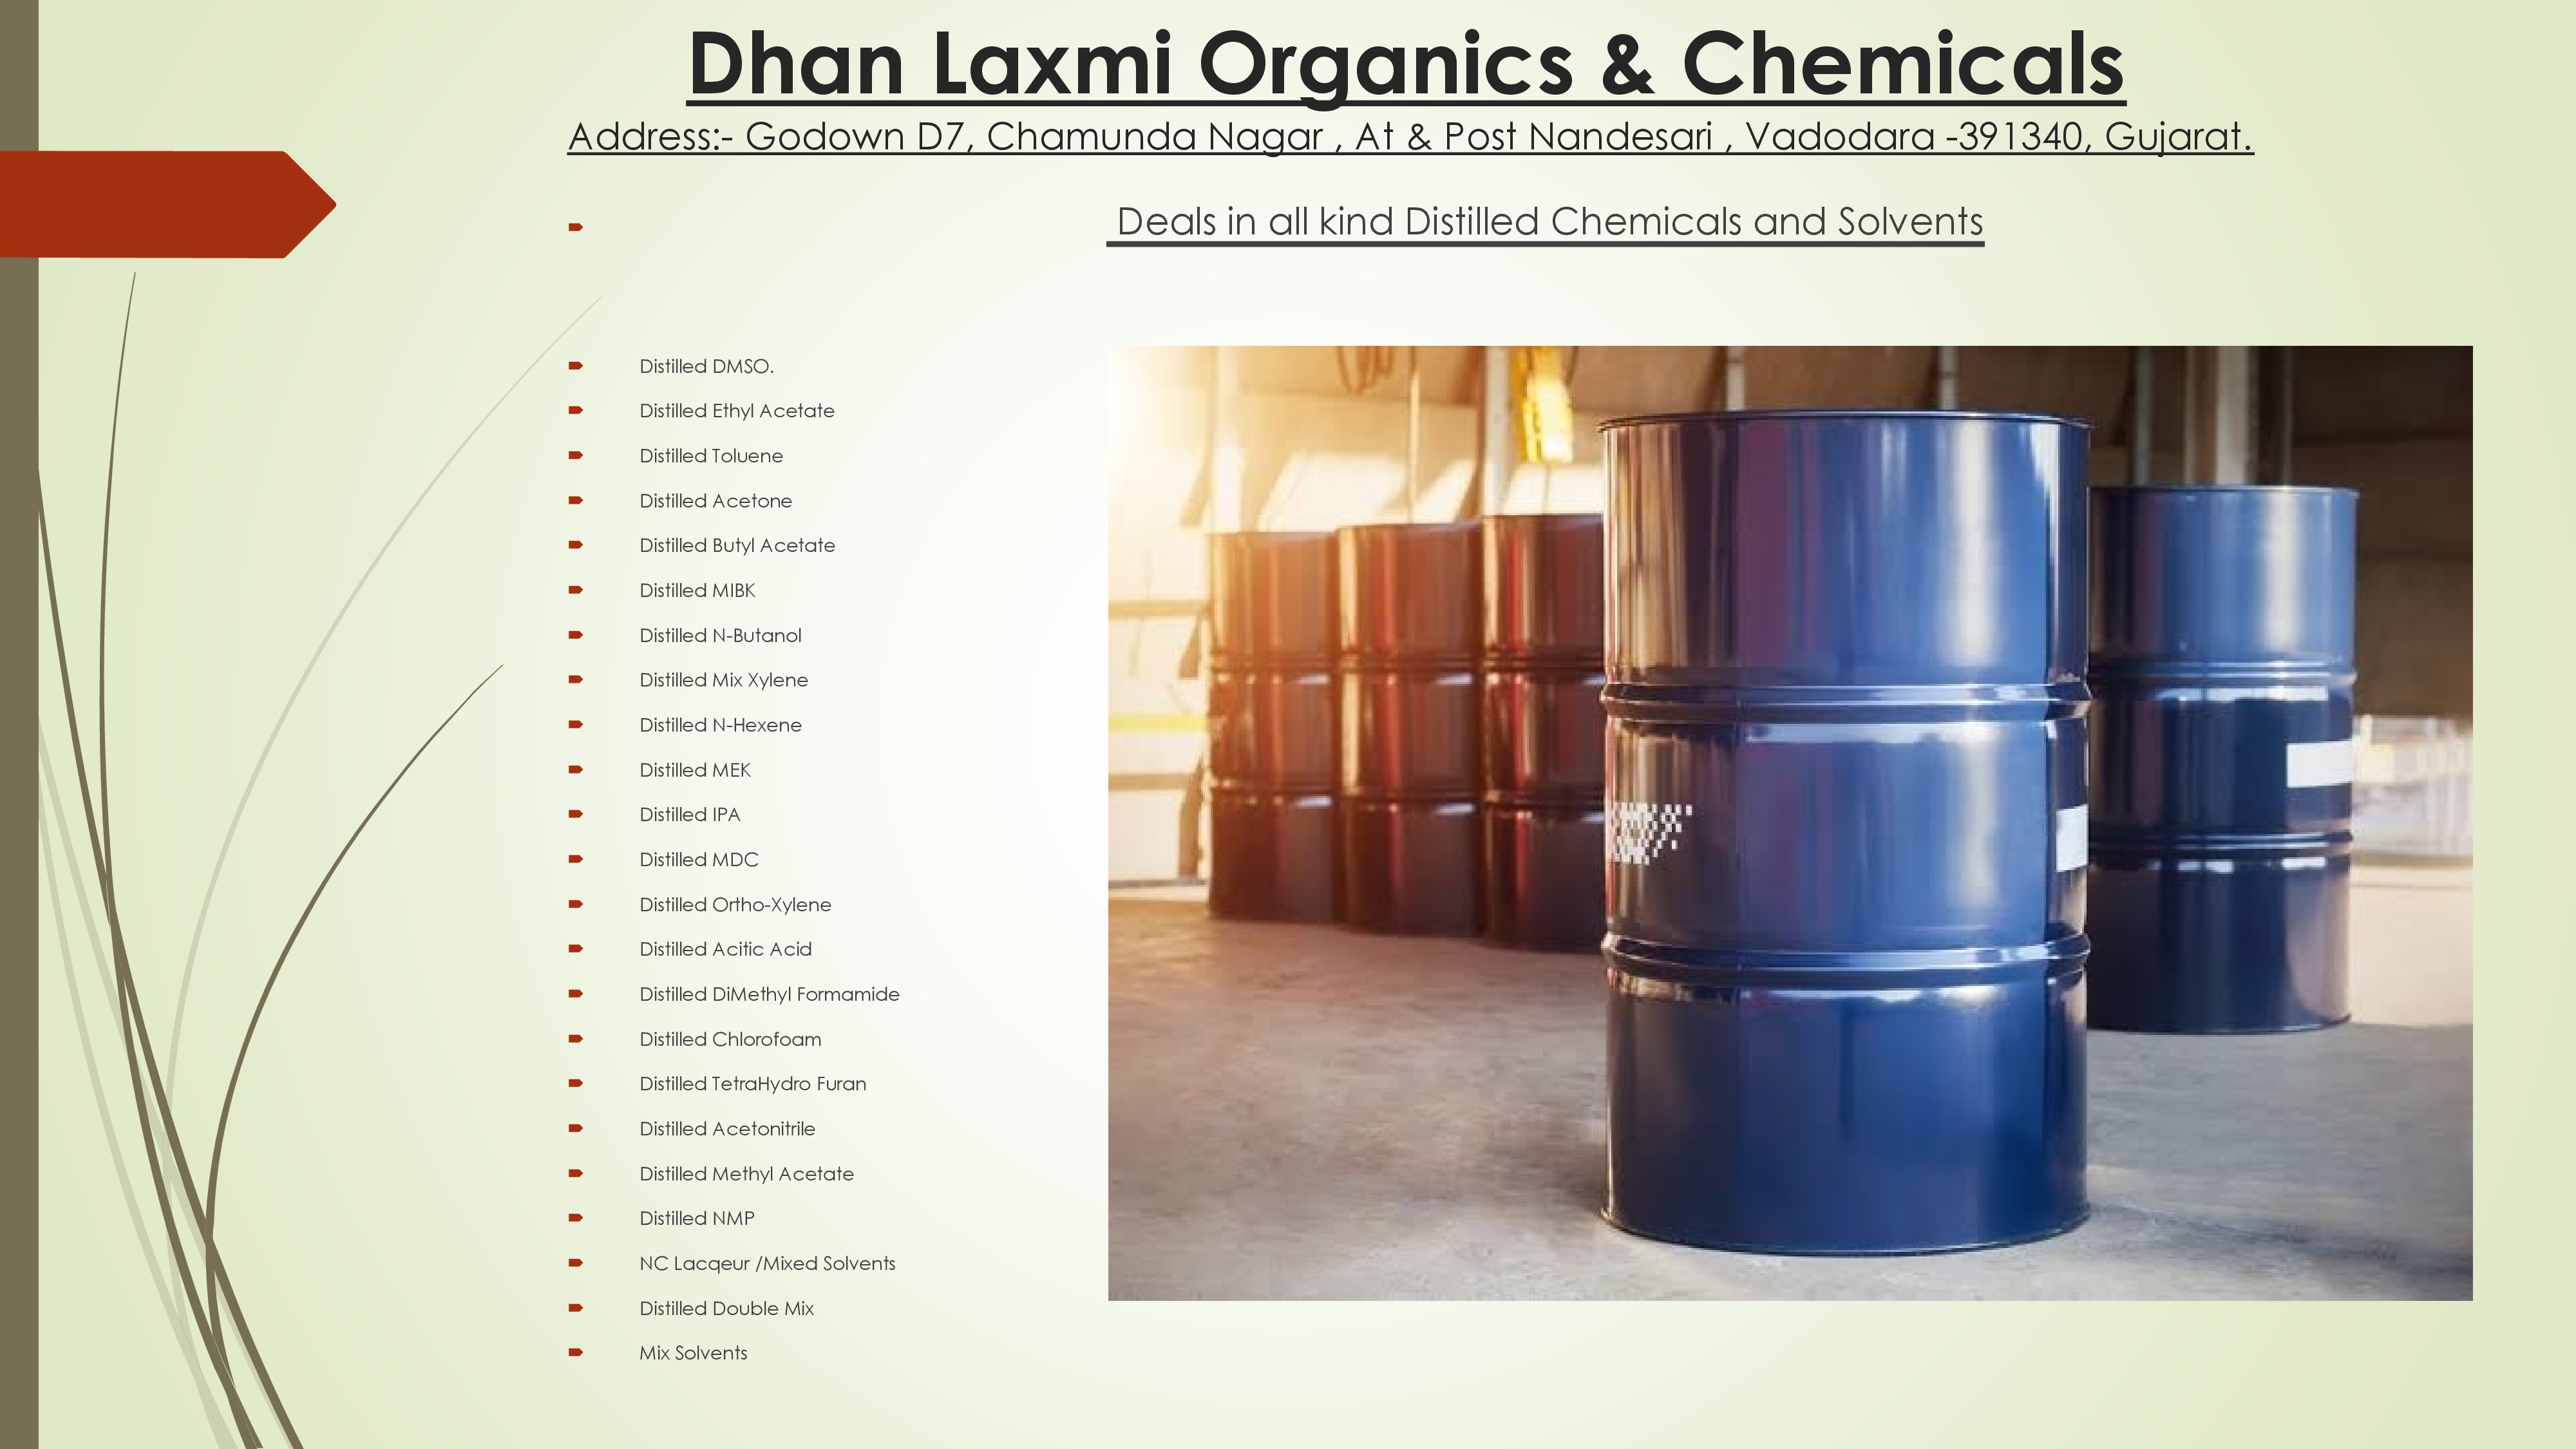 DhanLaxmi Organics & Chemicals